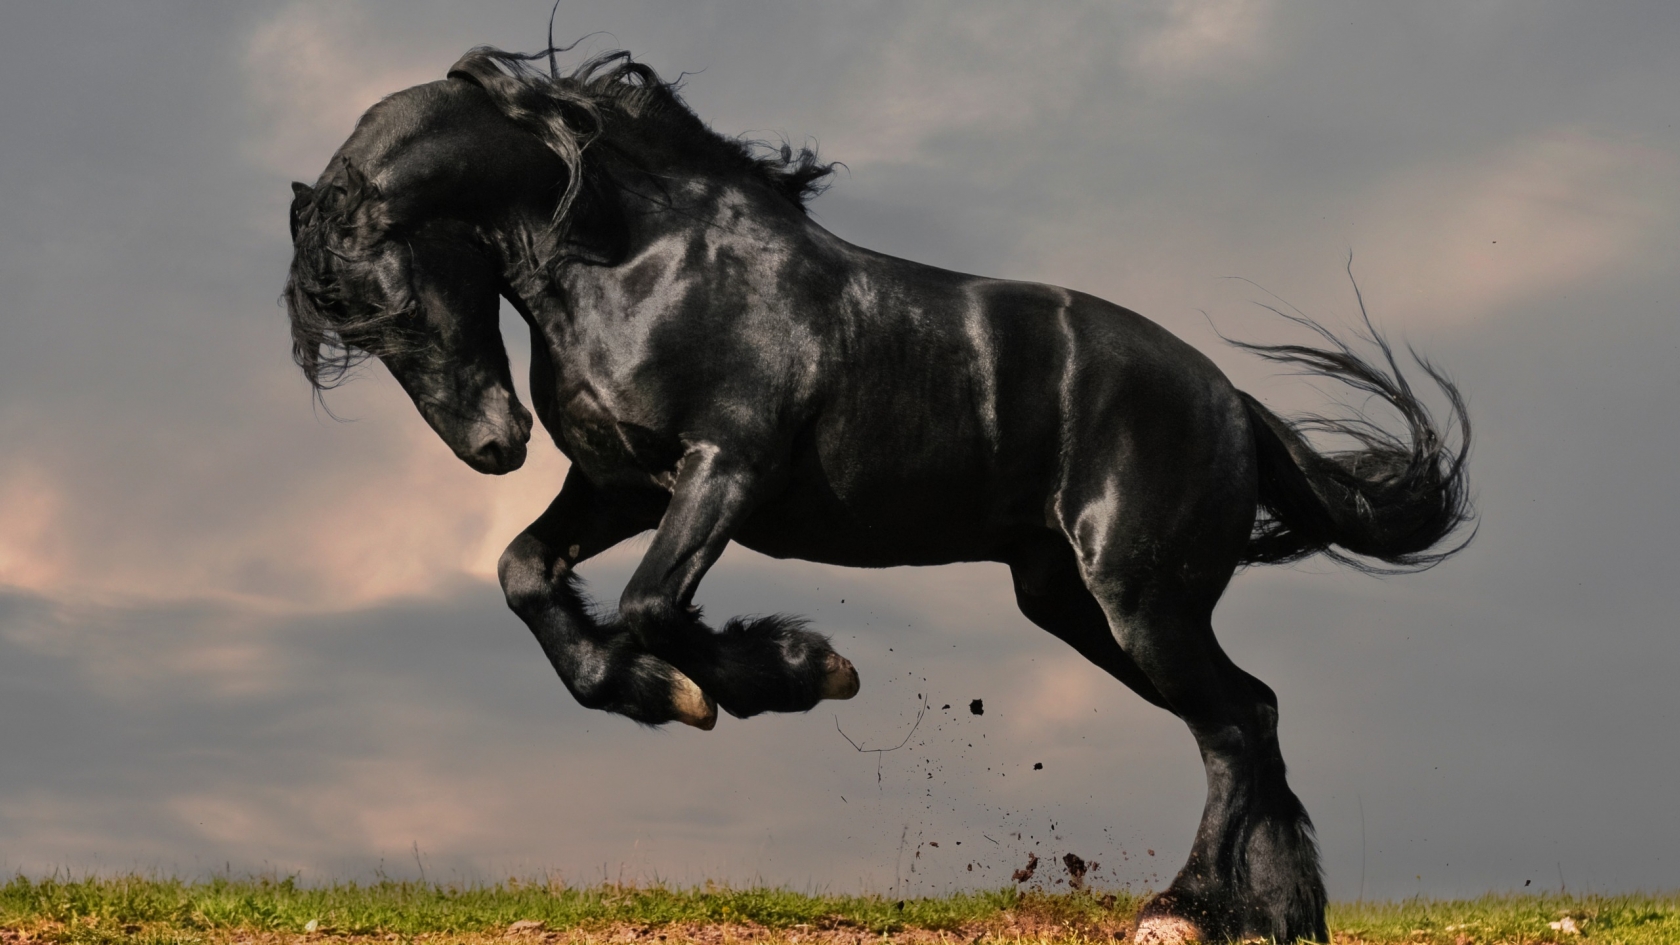 Gorgeous Black Horse for 1680 x 945 HDTV resolution